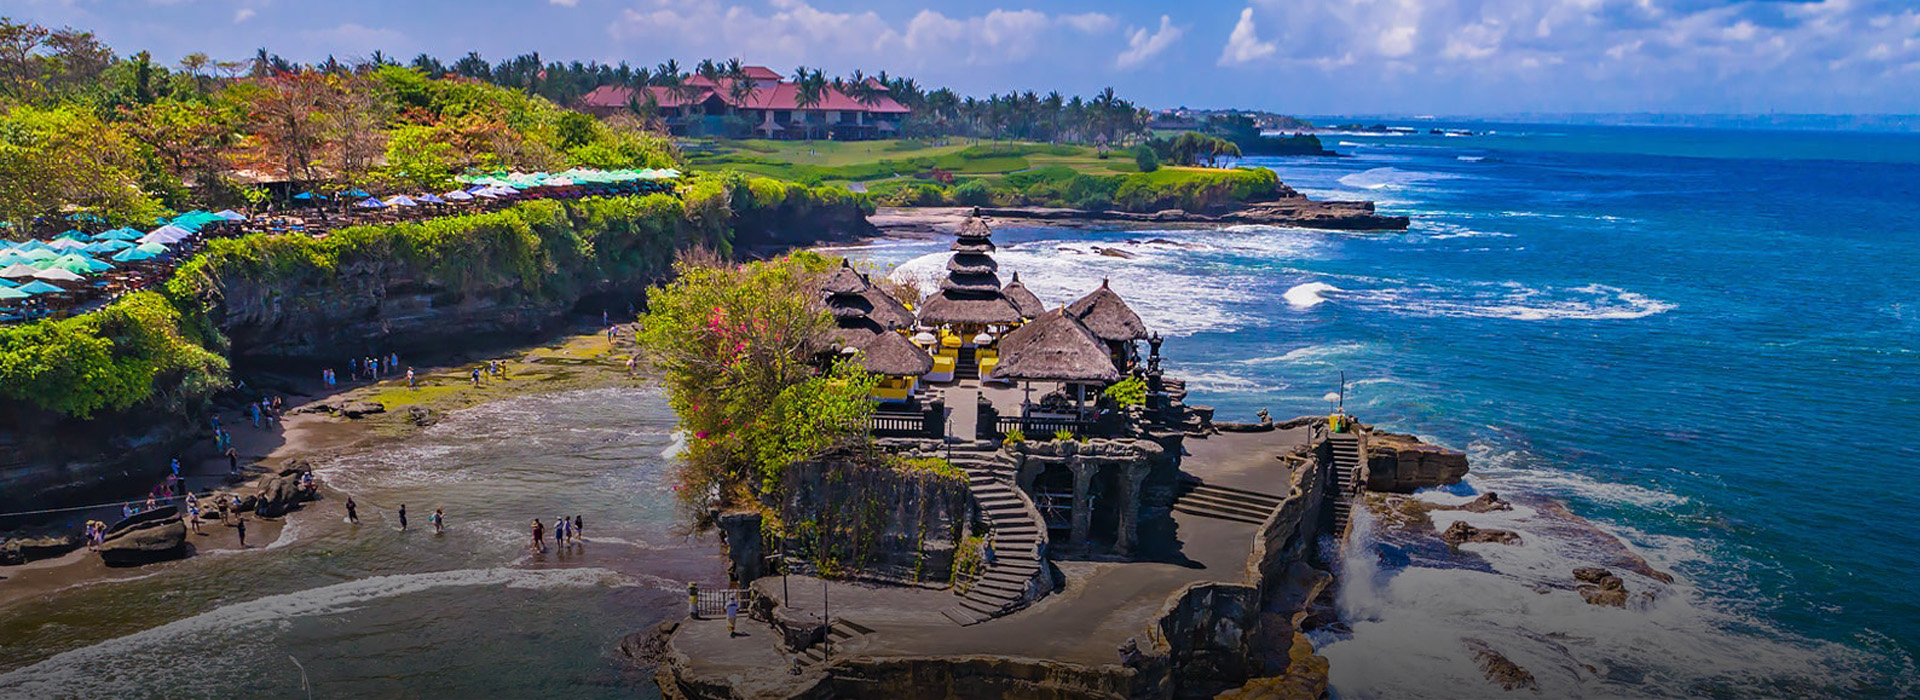 Bali Honeymoon Tour Packages